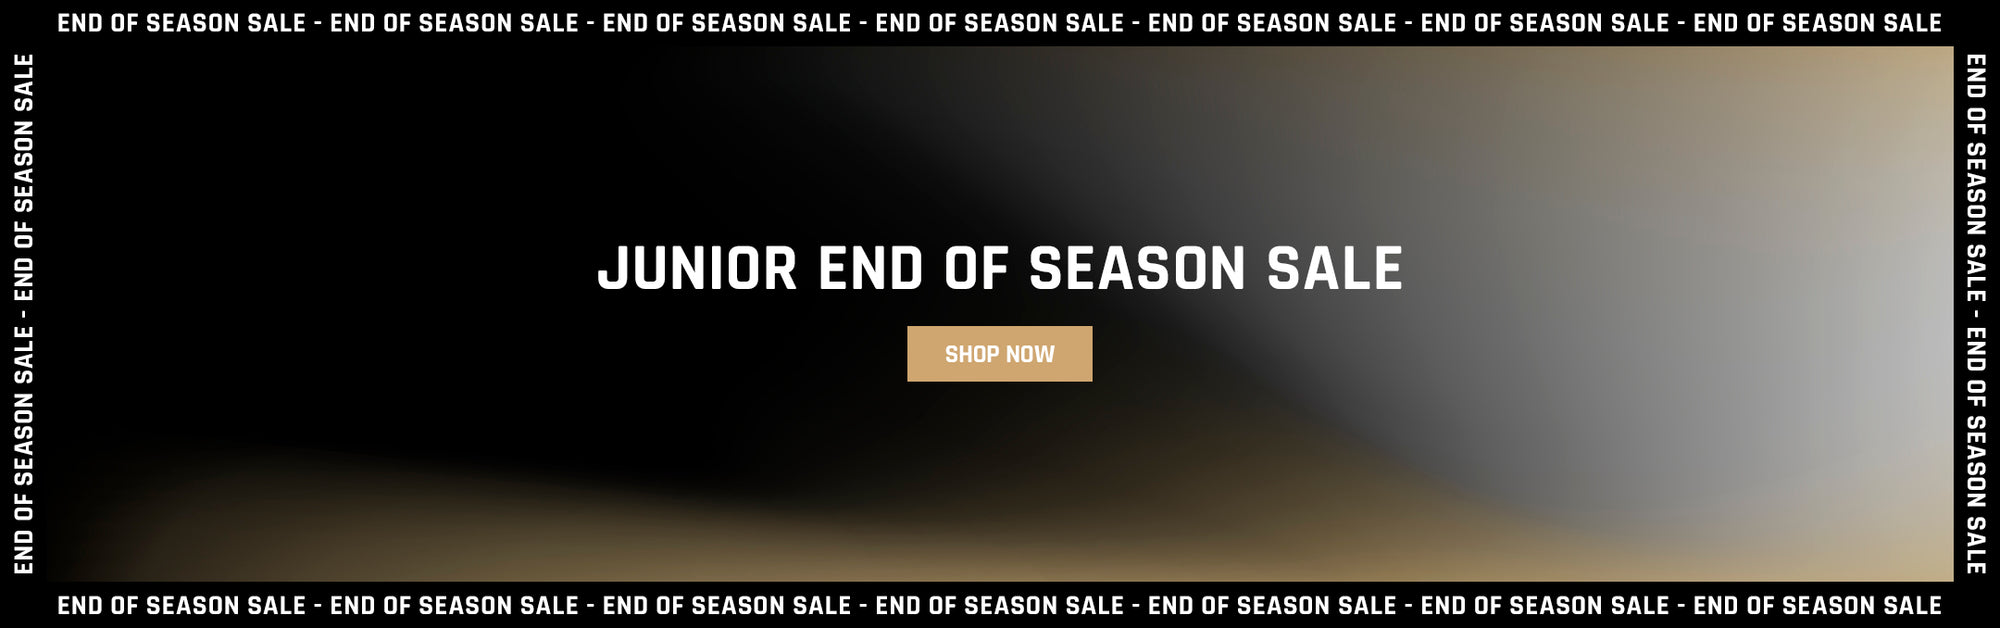 Junior End of Season Sale